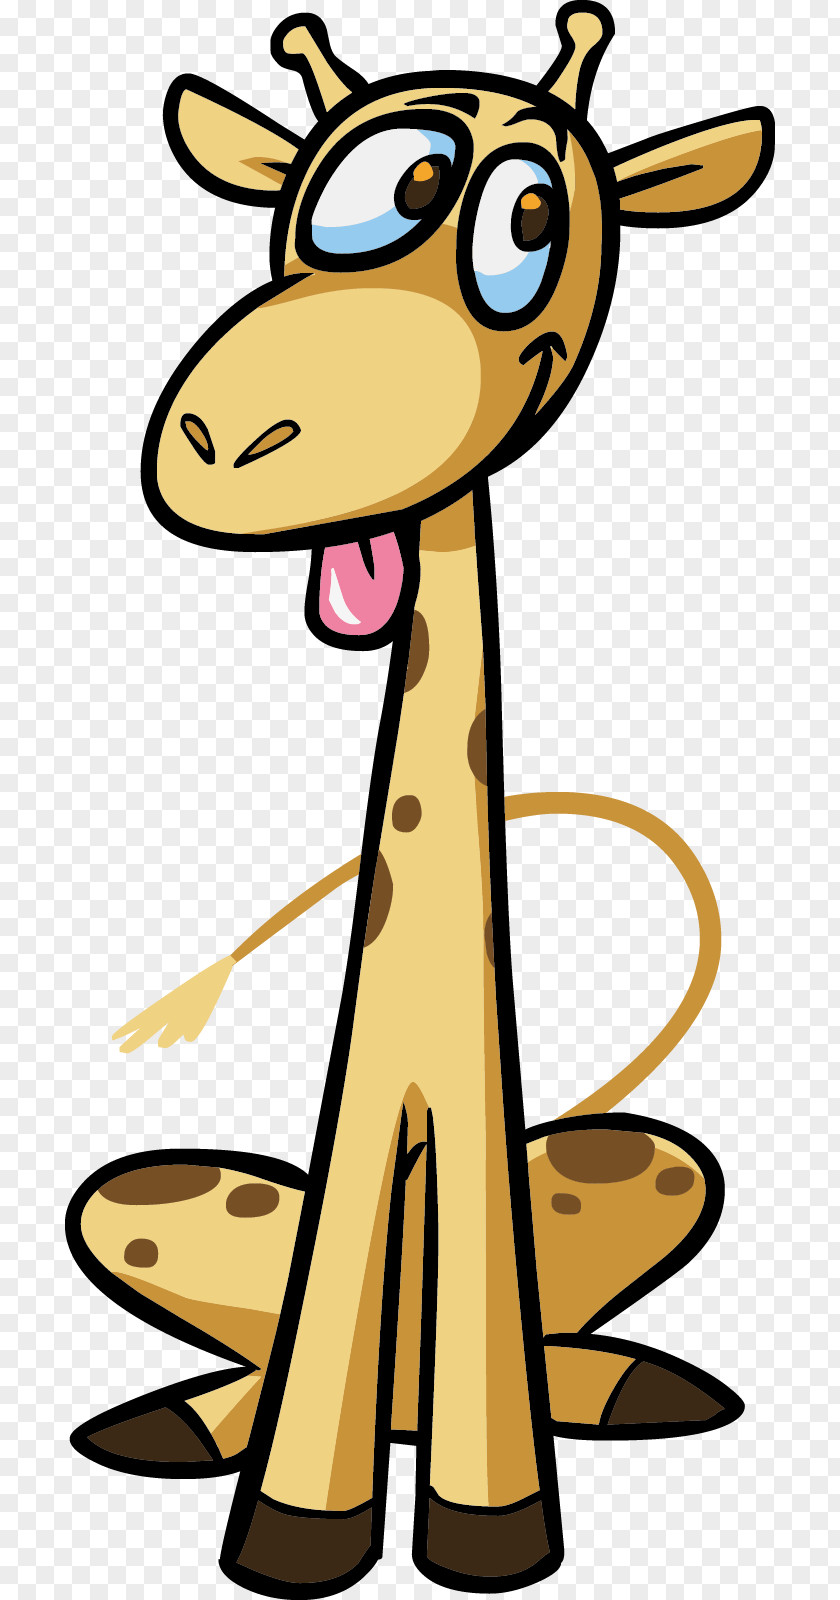 Giraffe Microsoft PowerPoint Presentation Animation Template Clip Art PNG